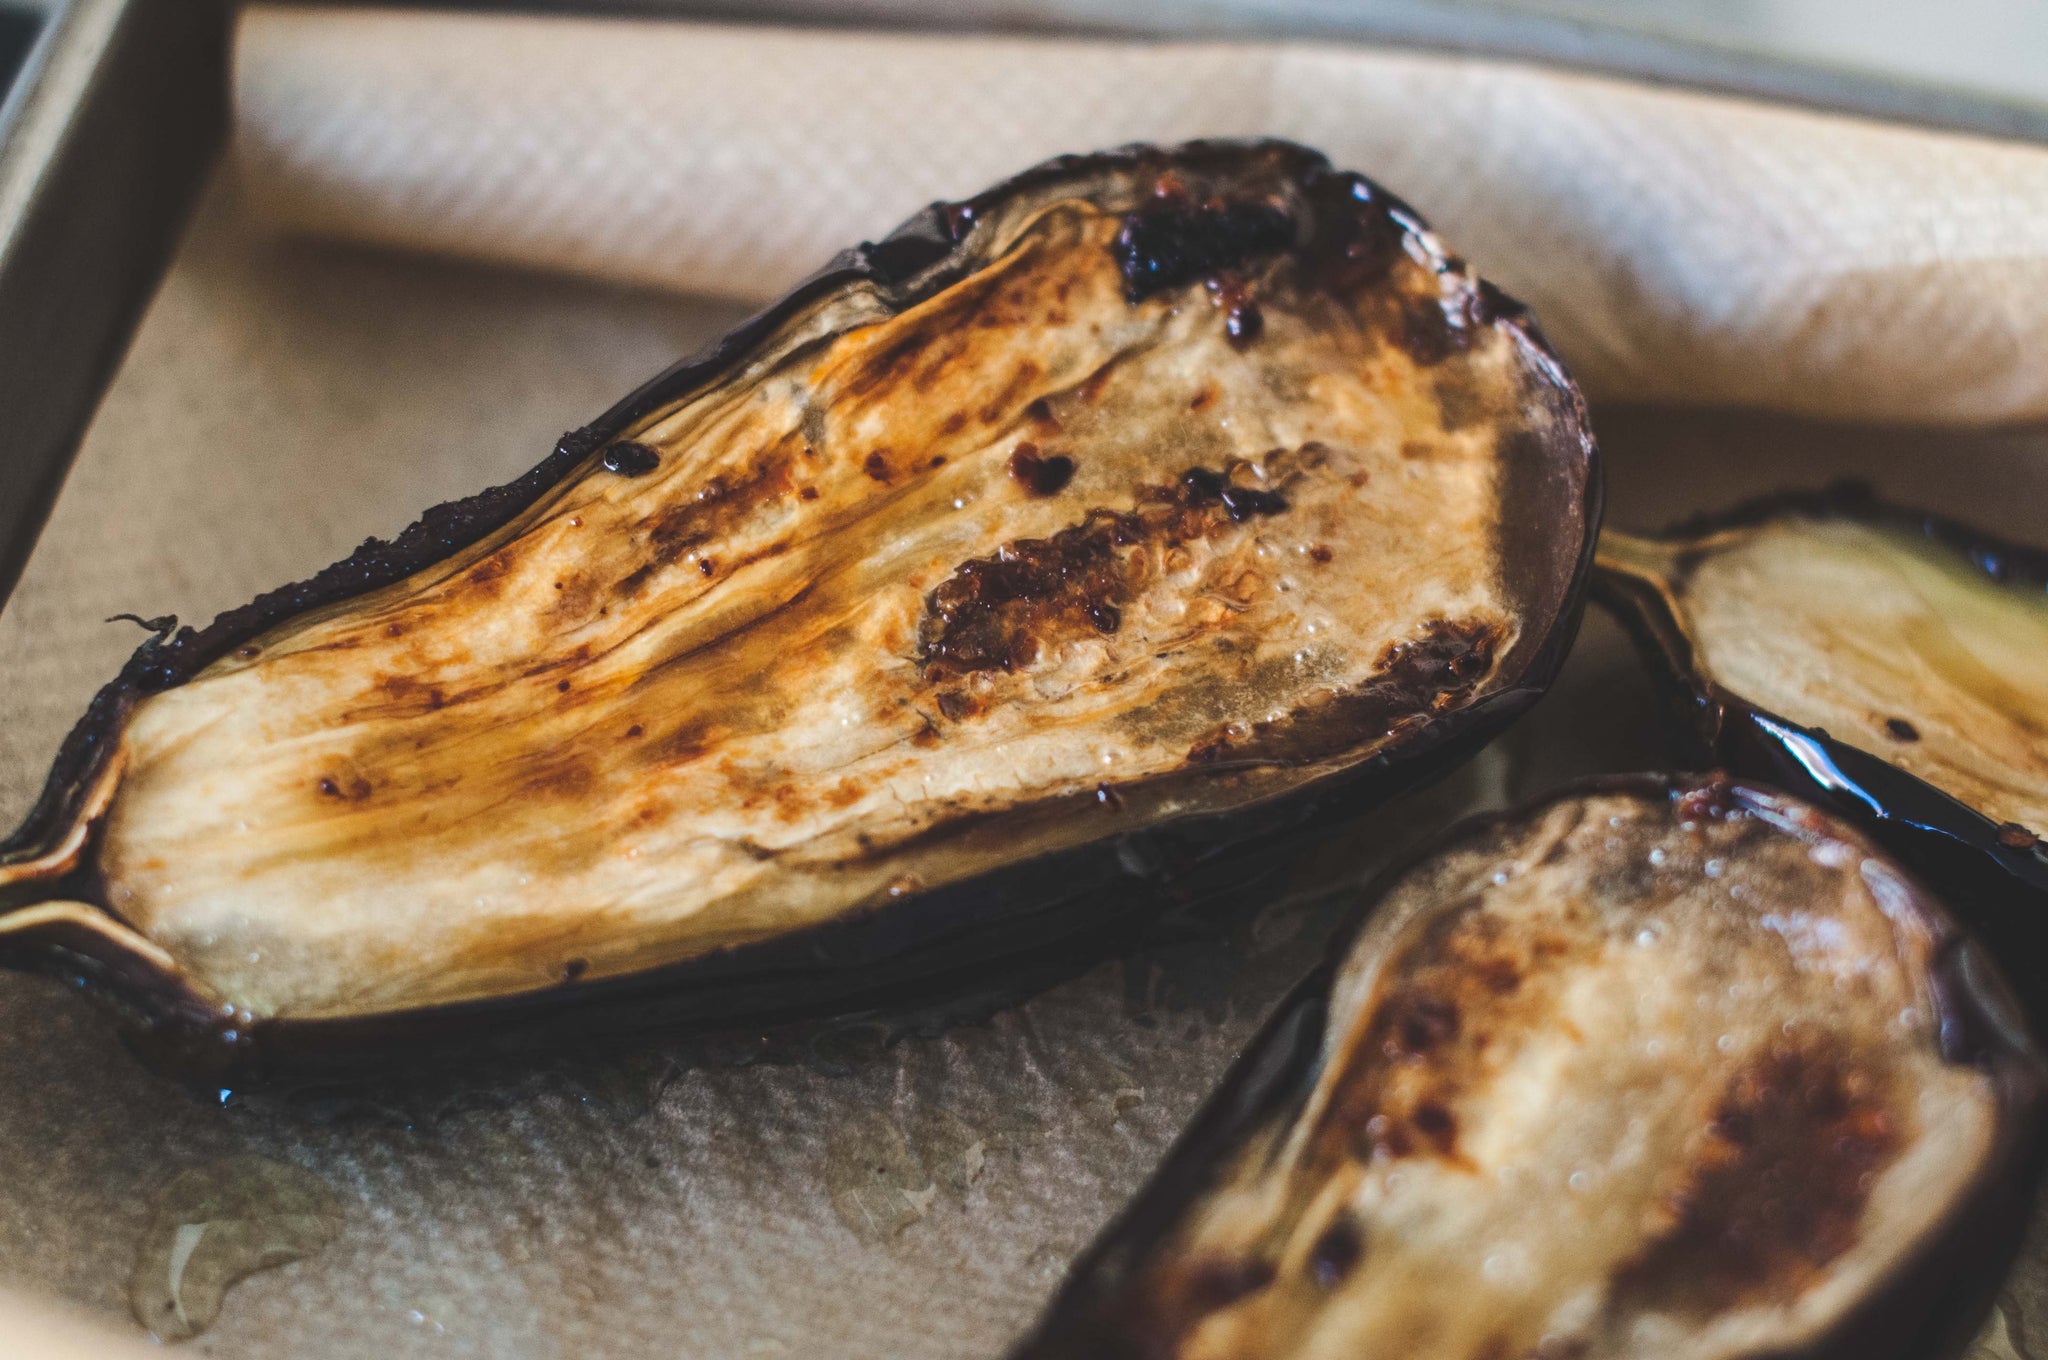 How to roast an eggplant?